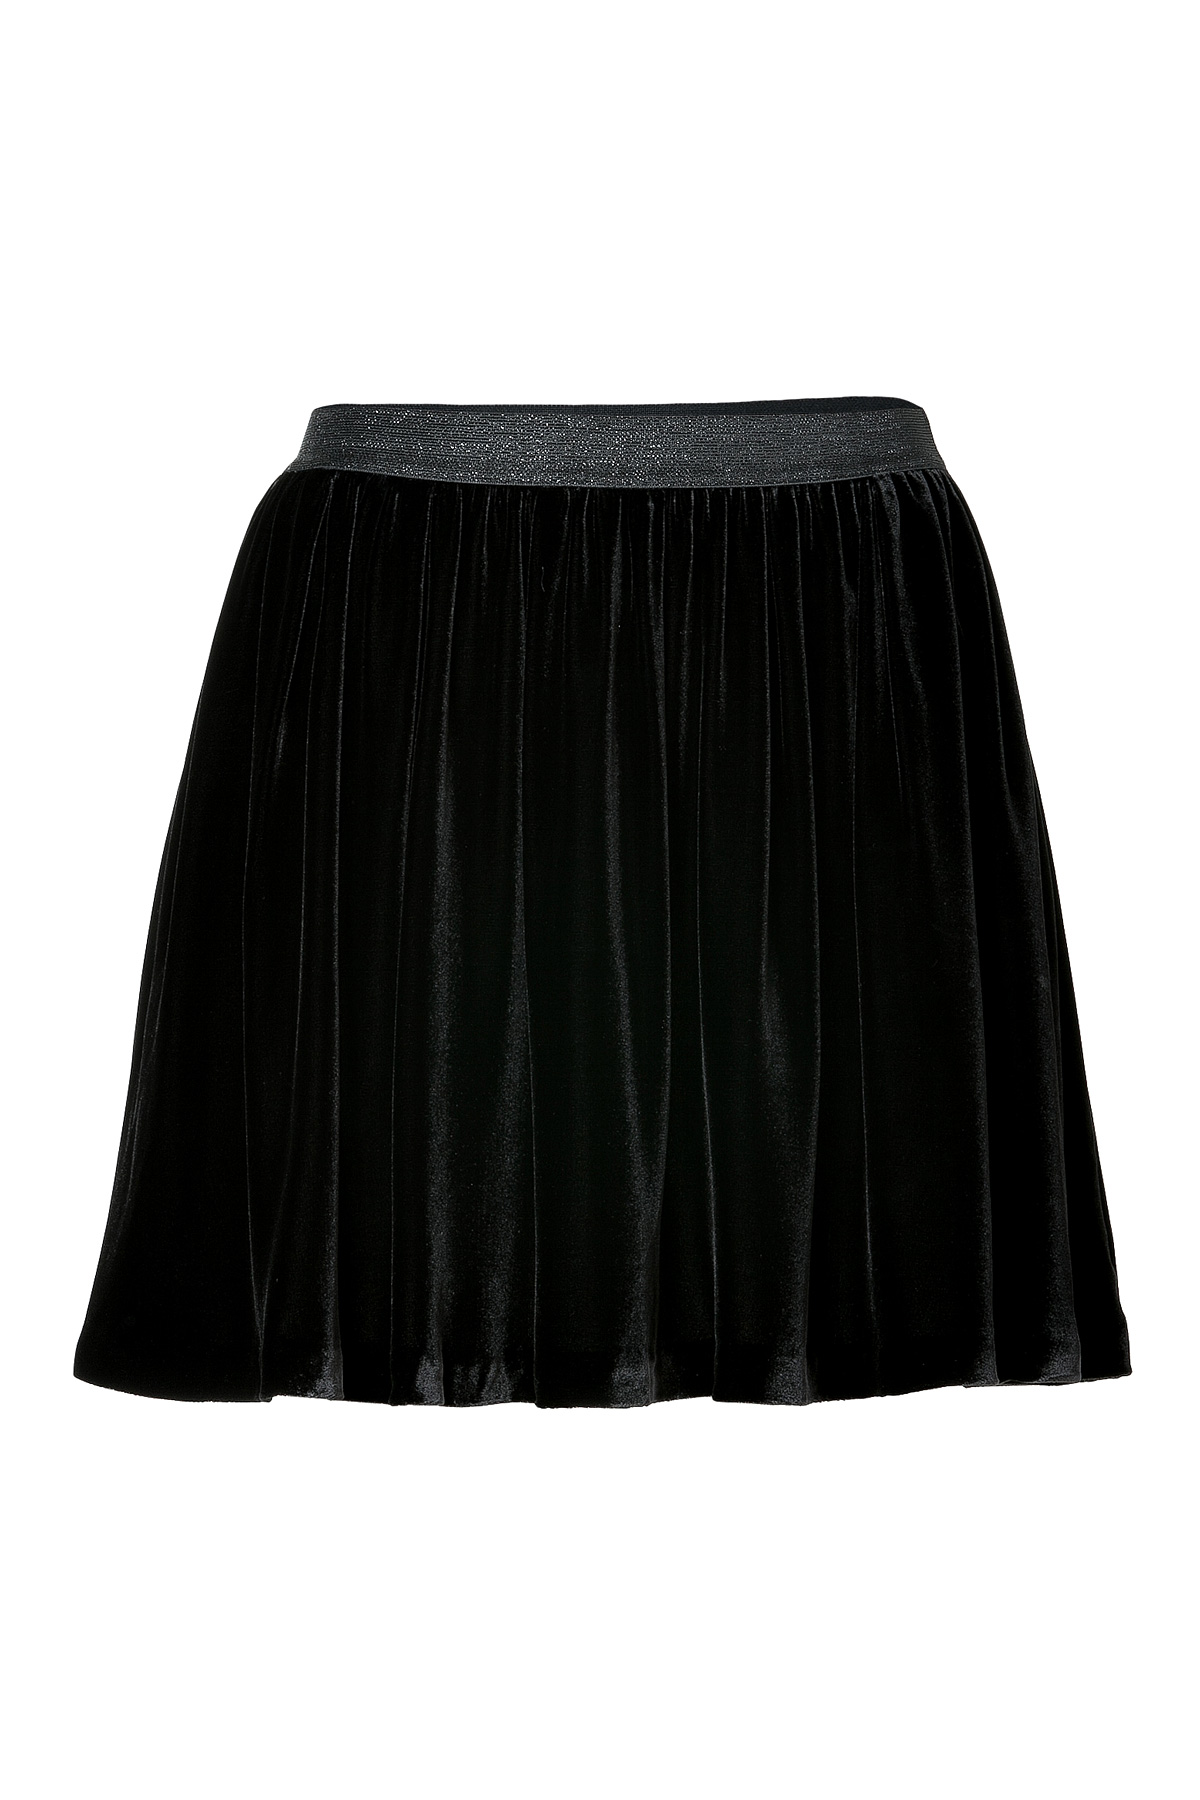 Juicy couture Silk Blend Velvet Skirt in Black | Lyst